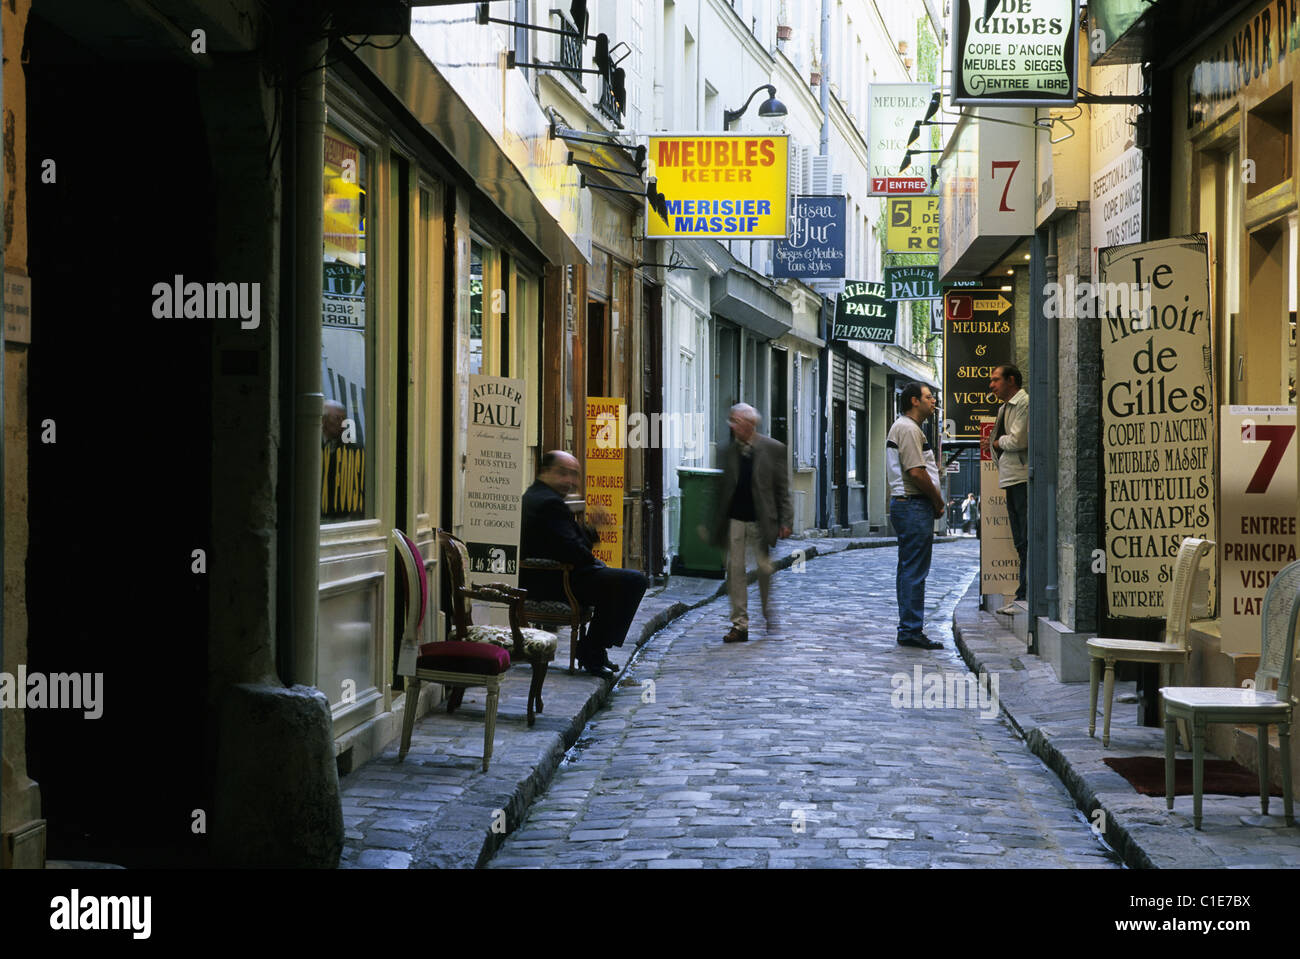 France, Paris, district of the Faubourg Saint Antoine, furniture shops in Chantier Passage Stock Photo